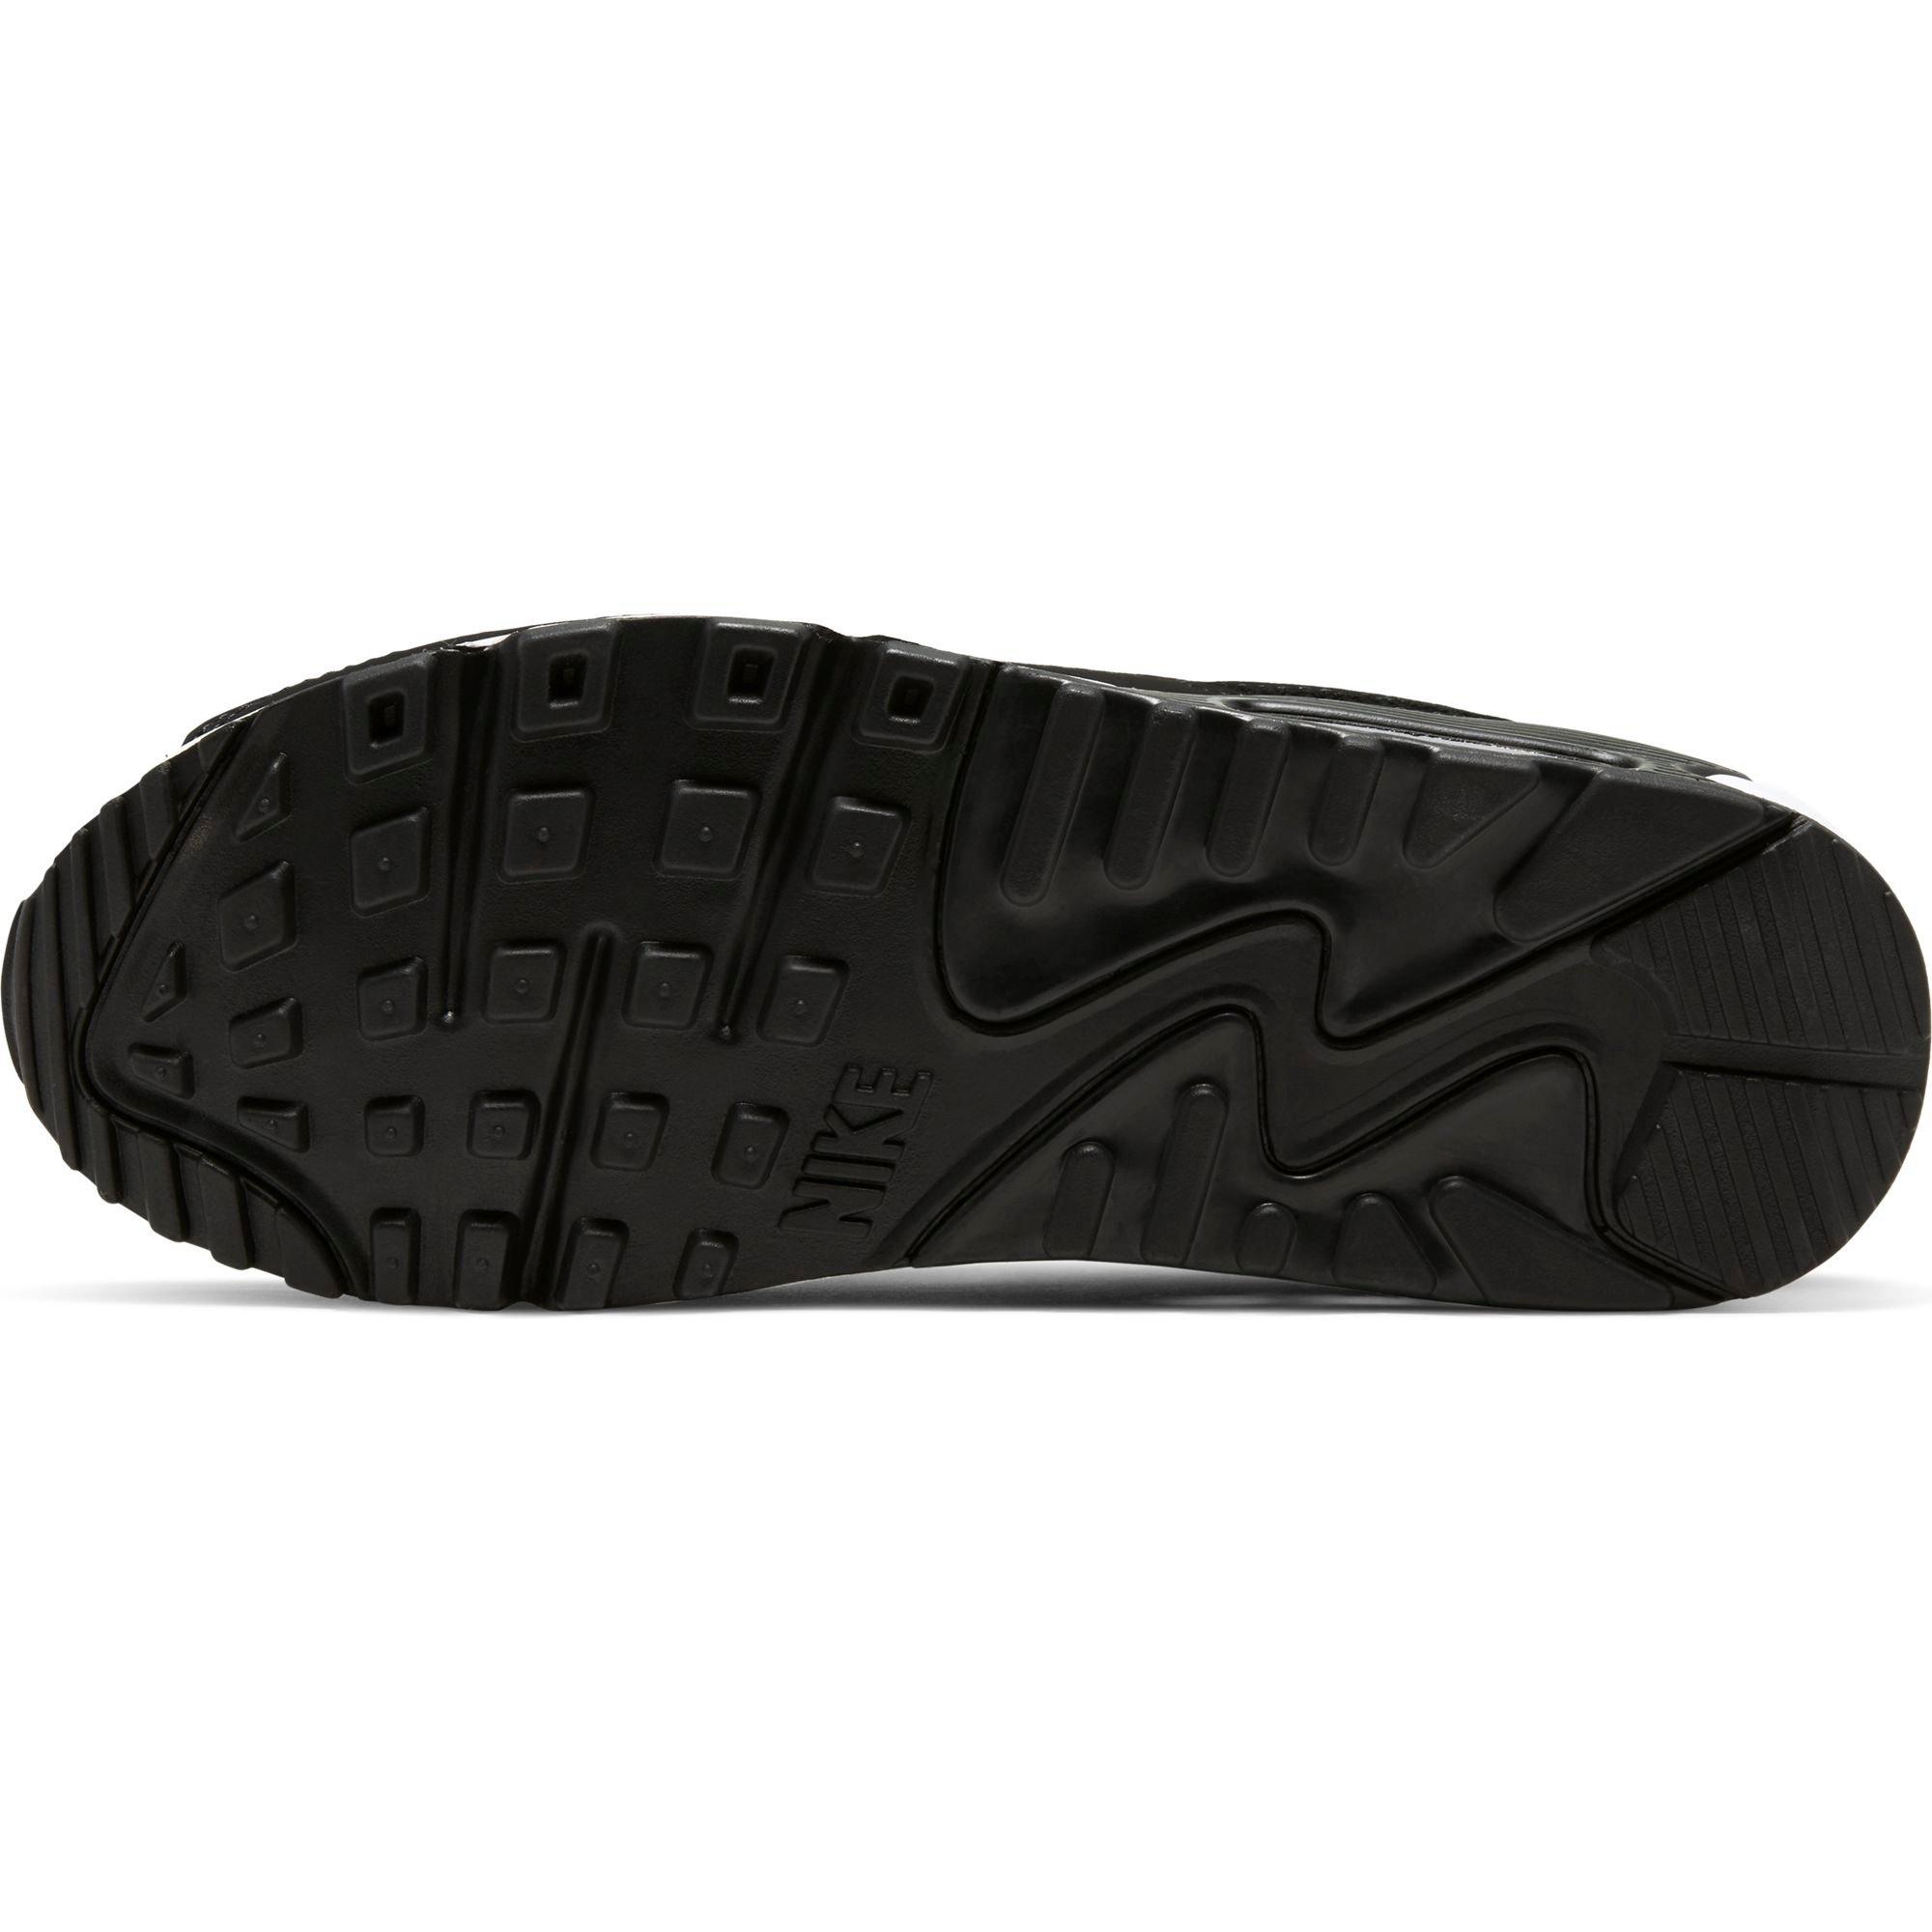 Nike Air Max 90 "Black/White" Shoe - Black/White